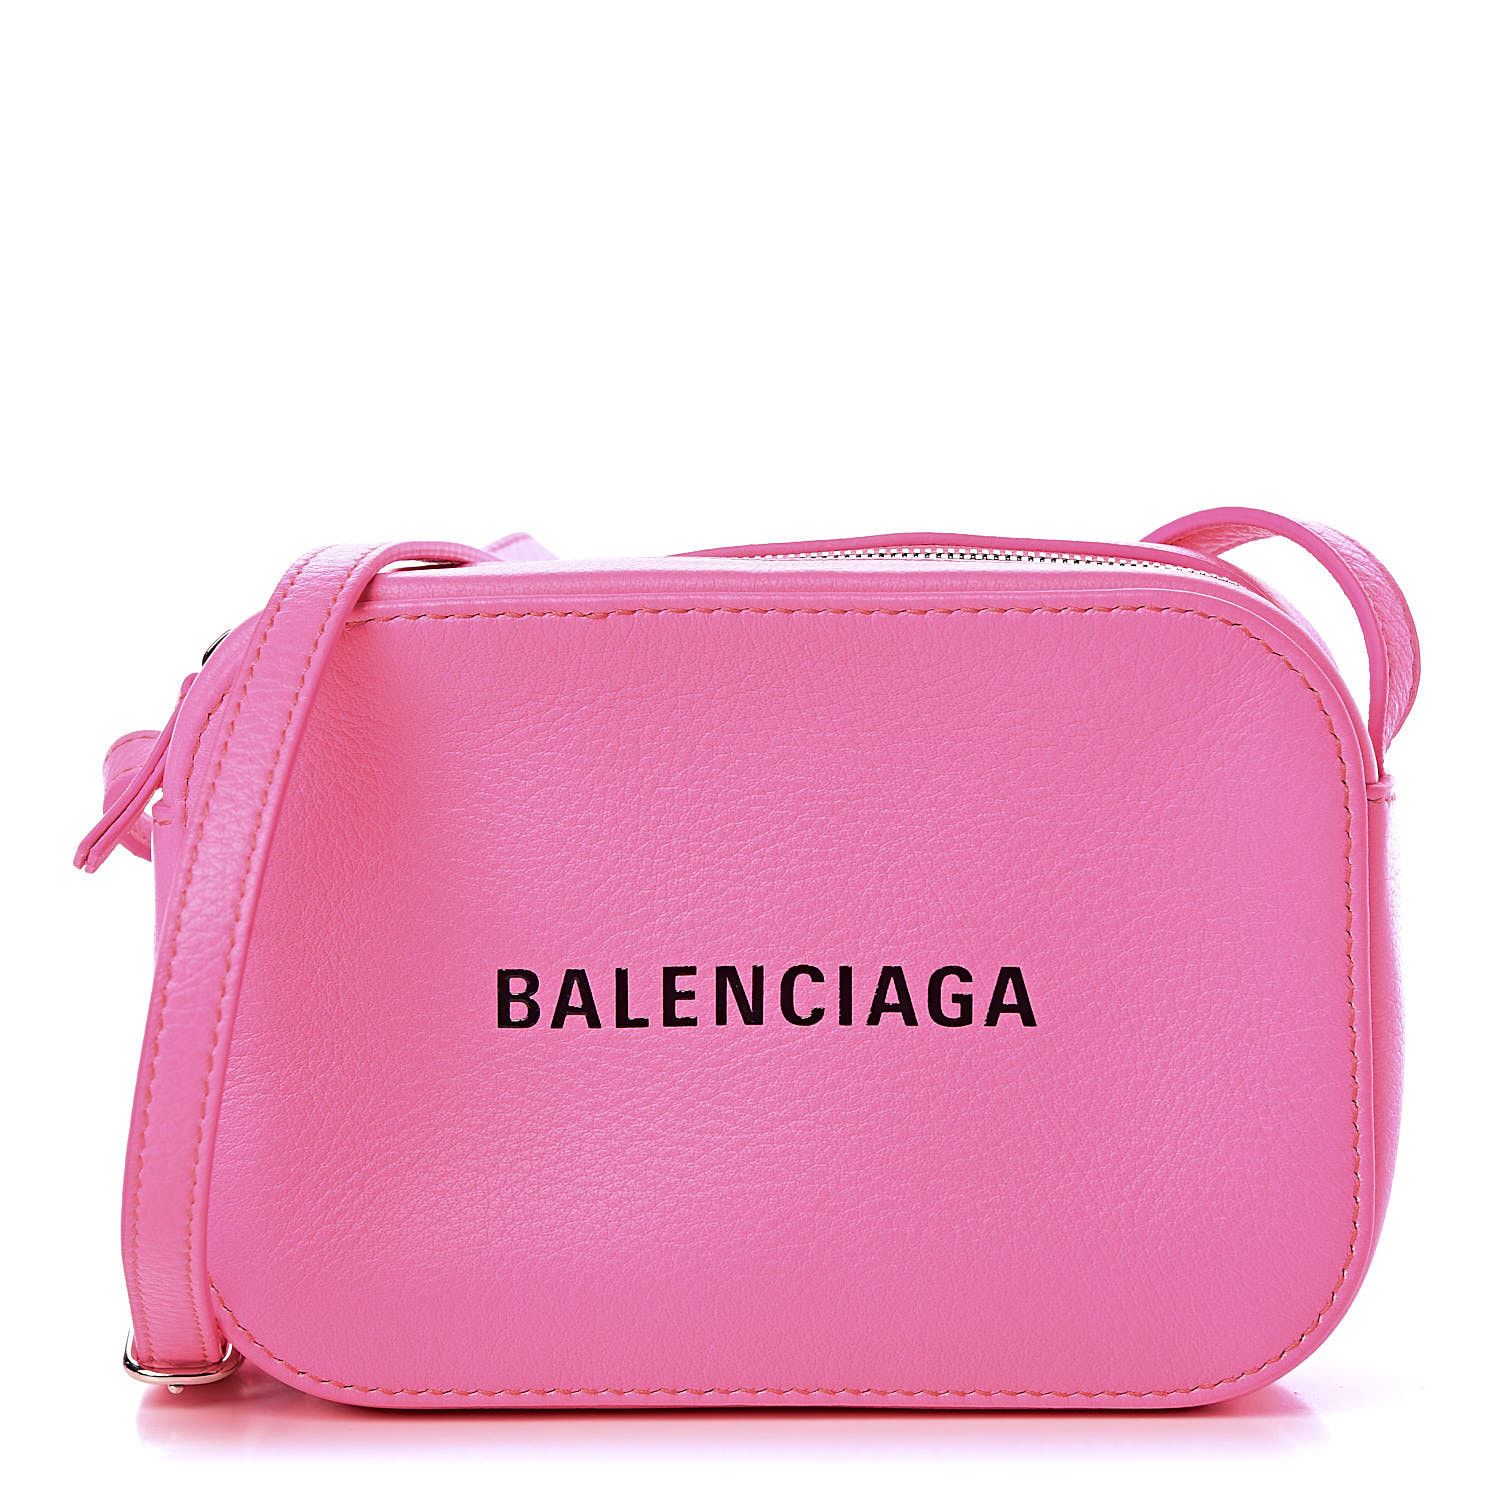 balenciaga pink camera bag